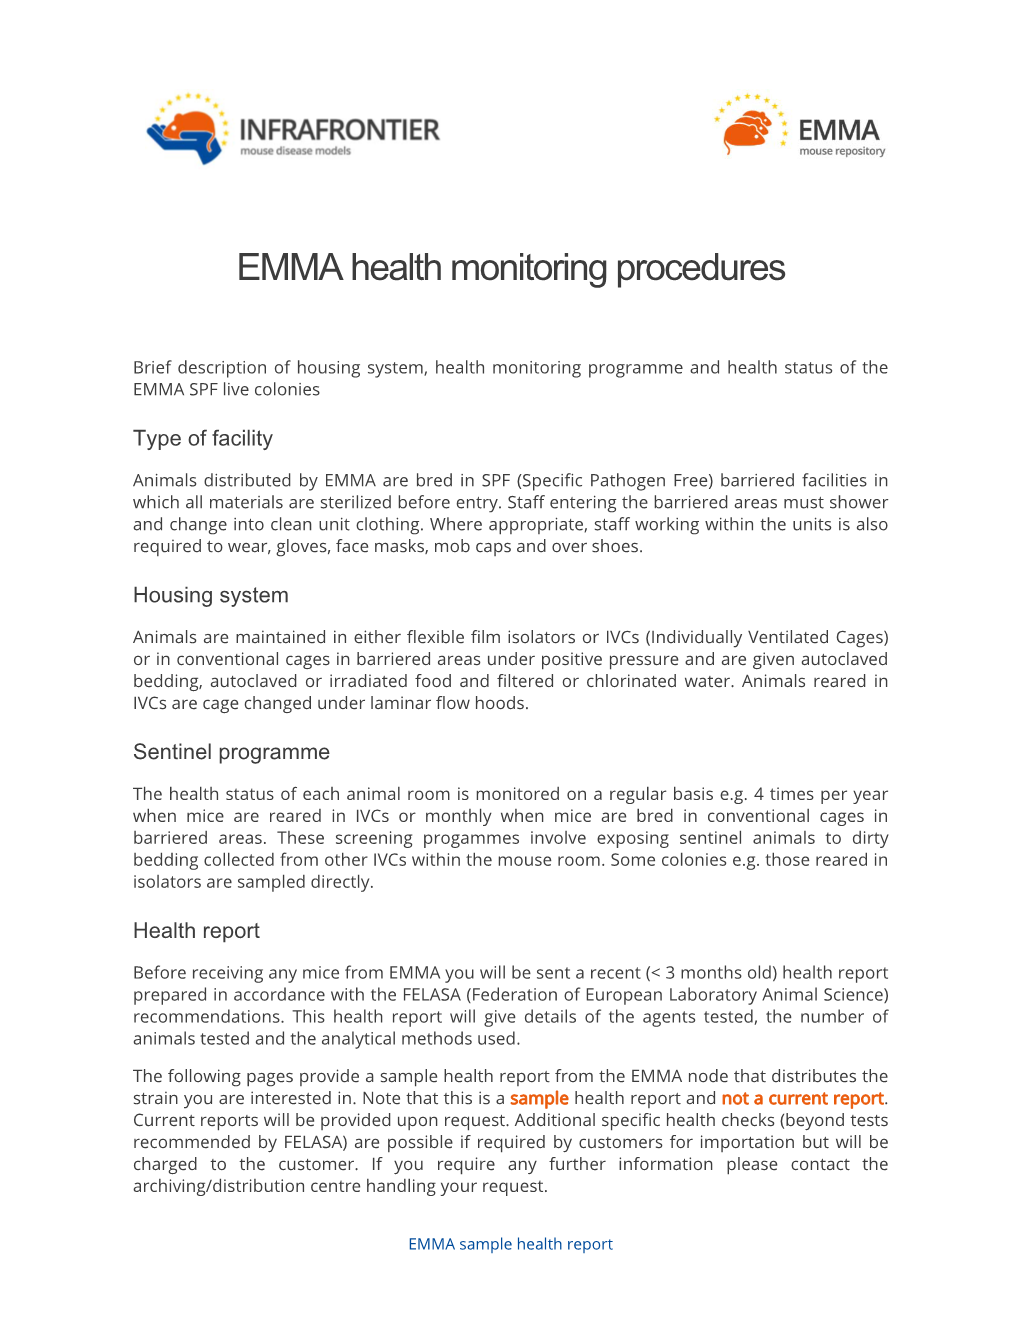 EMMA Health Monitoring Procedures